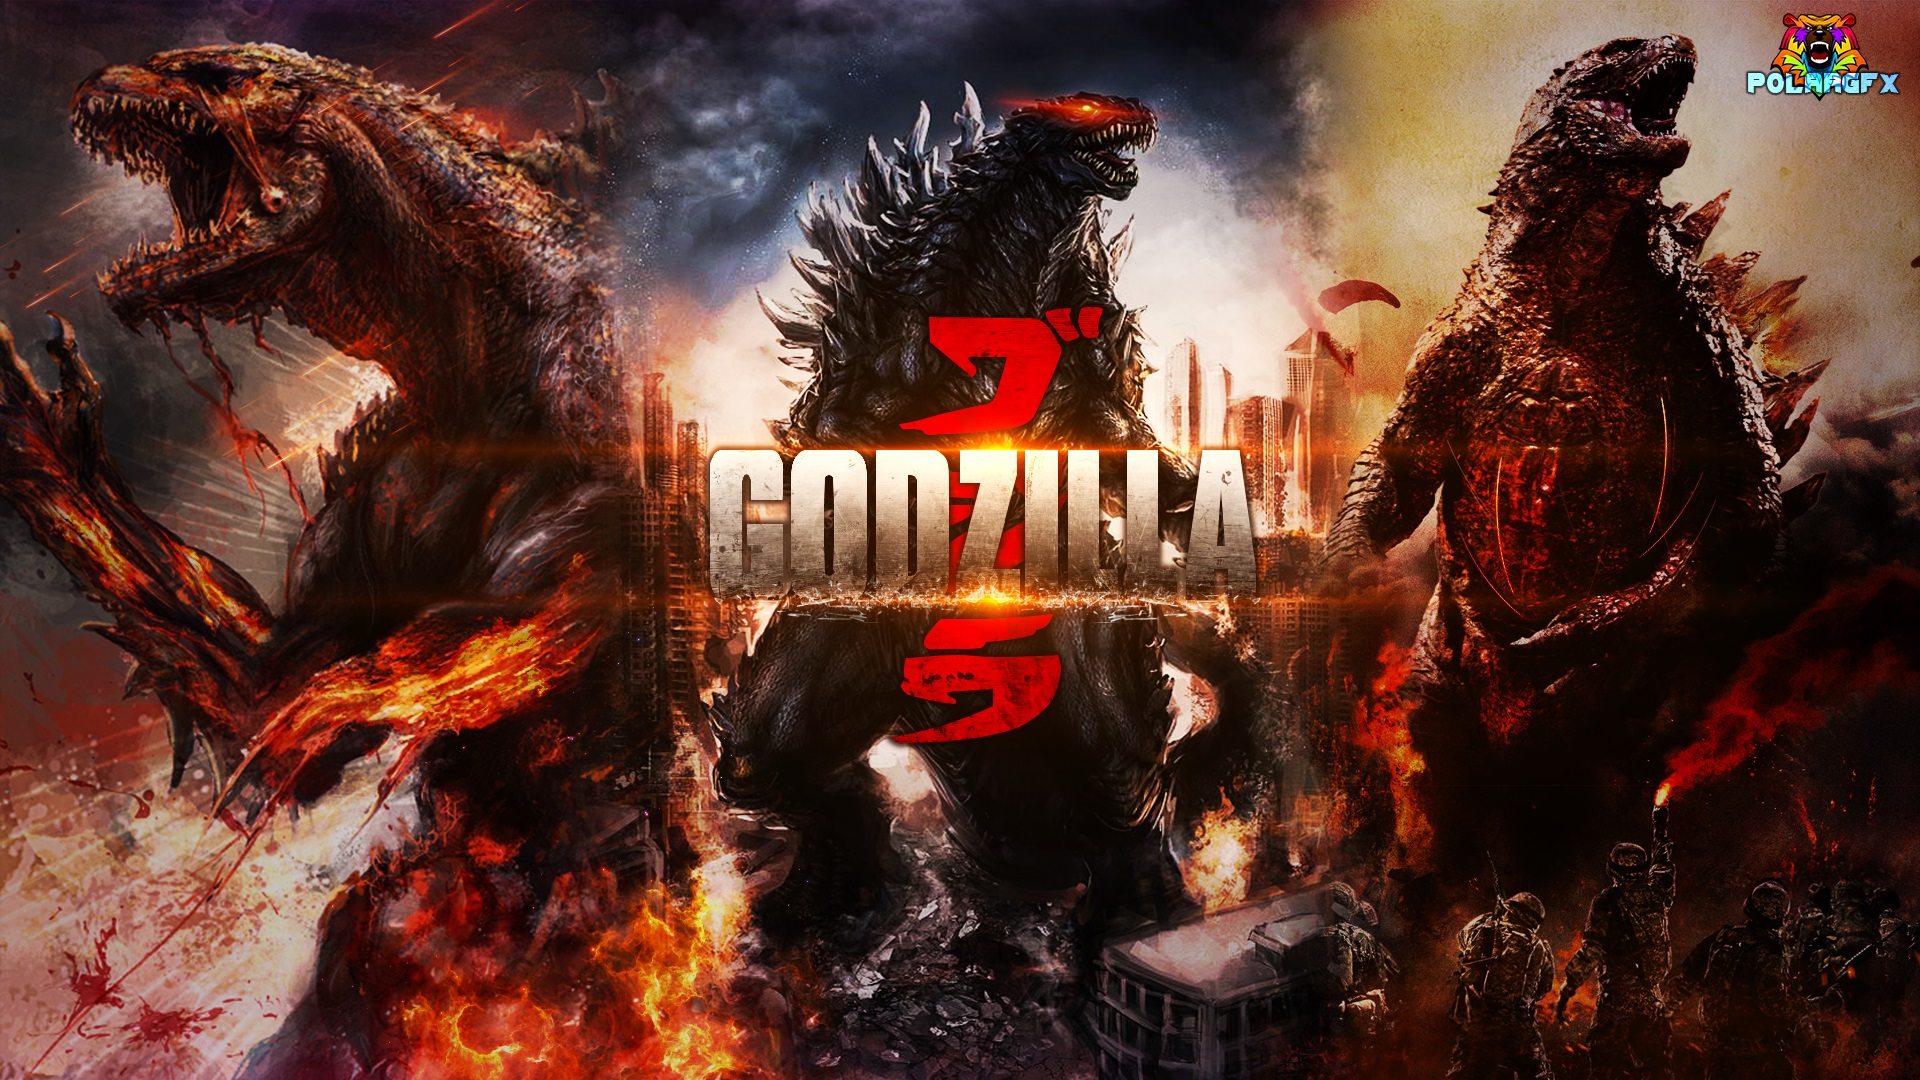 Godzilla Wallpapers for Desktop - WallpaperSafari